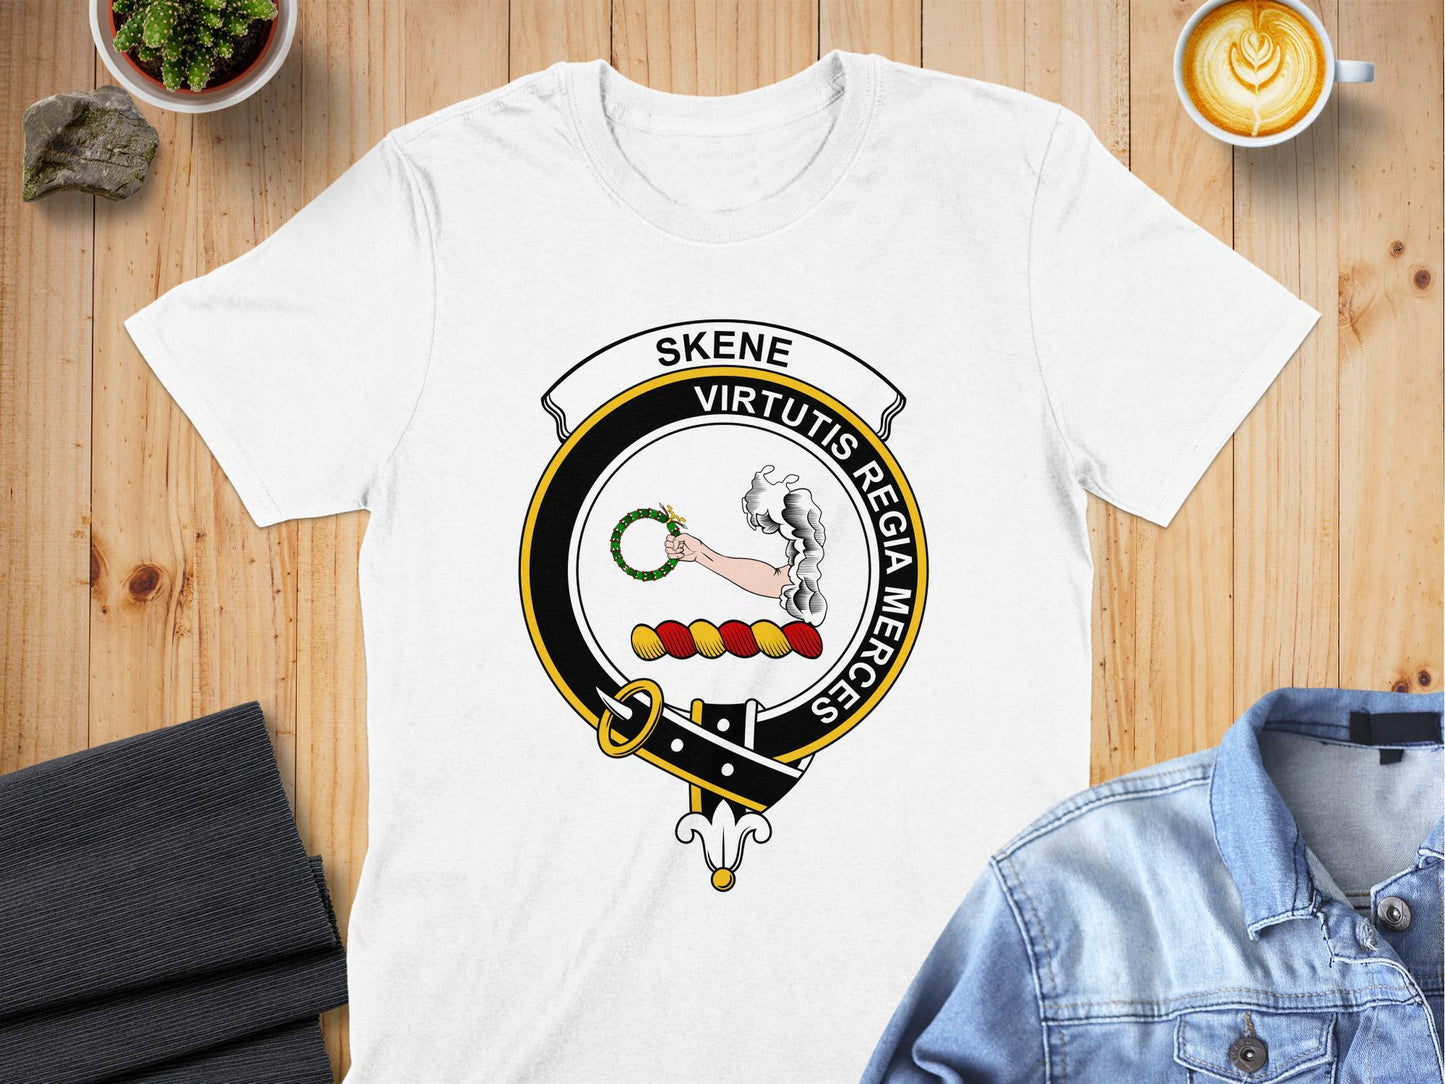 Scottish Skene Clan Crest Badge Emblem Graphic T-Shirt - Living Stone Gifts